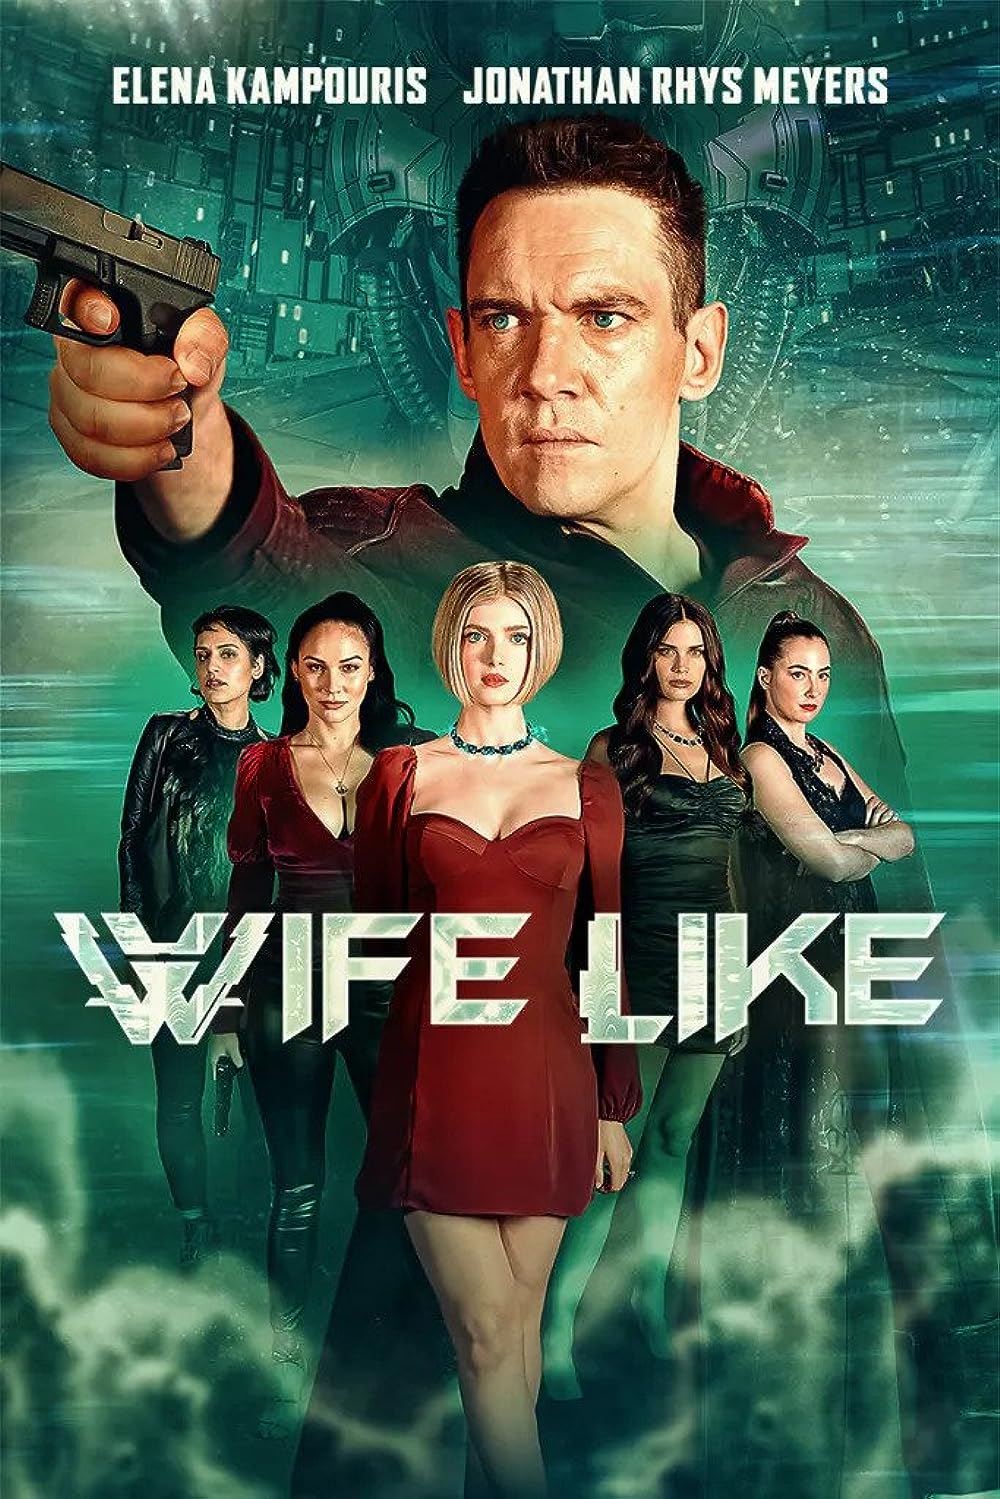 Wifelike (September 11) - Streaming on NetflixIn a futuristic landscape, 